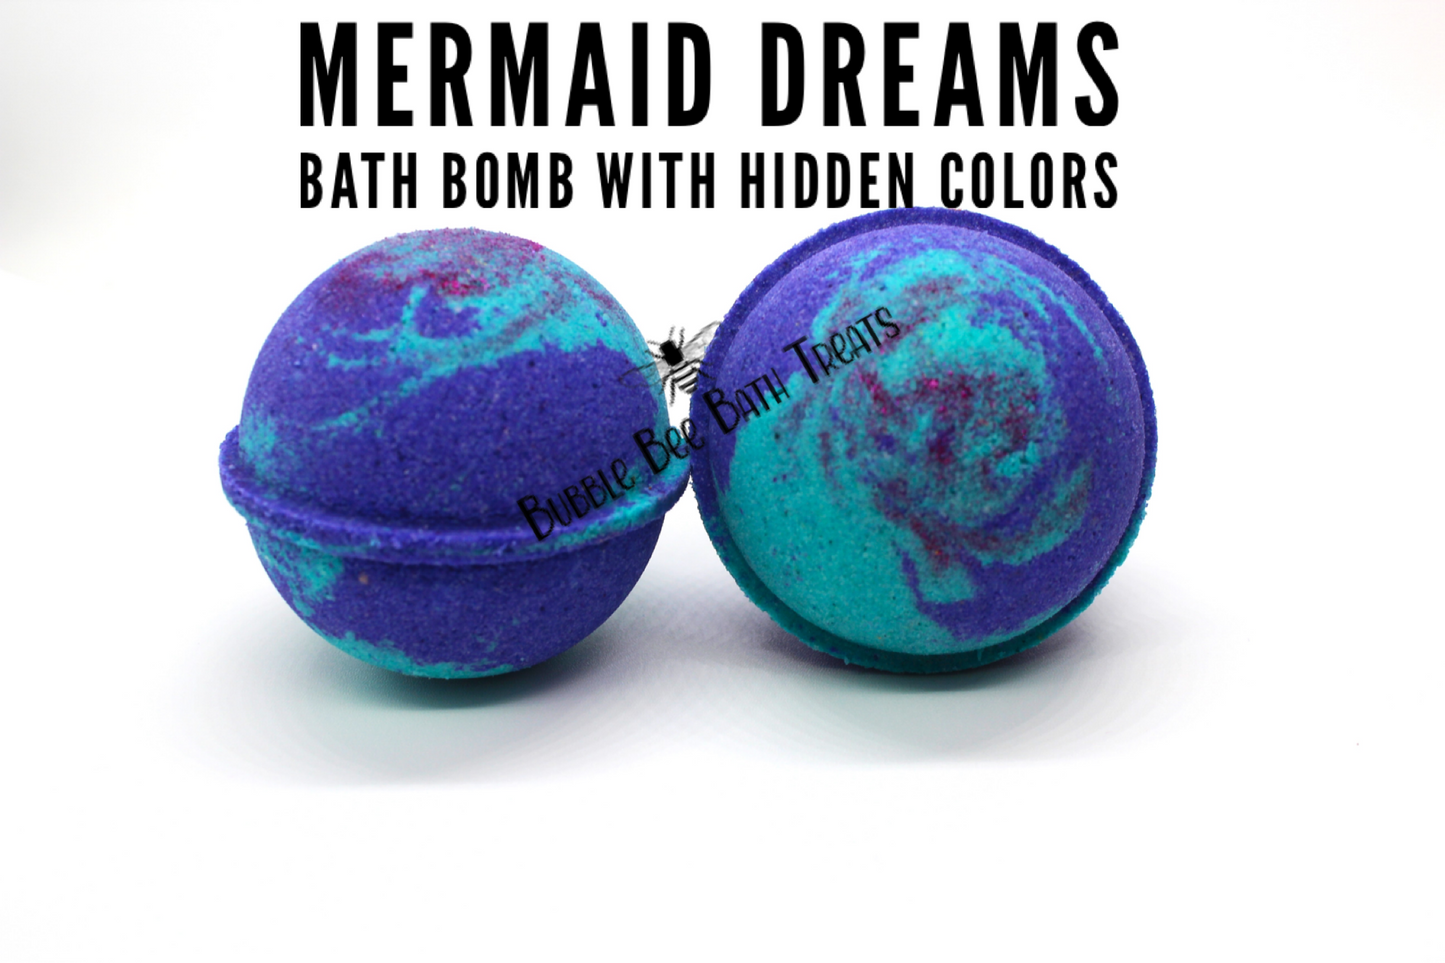 Mermaid Dreams Bath bomb with hidden colors  2.5 inch Round